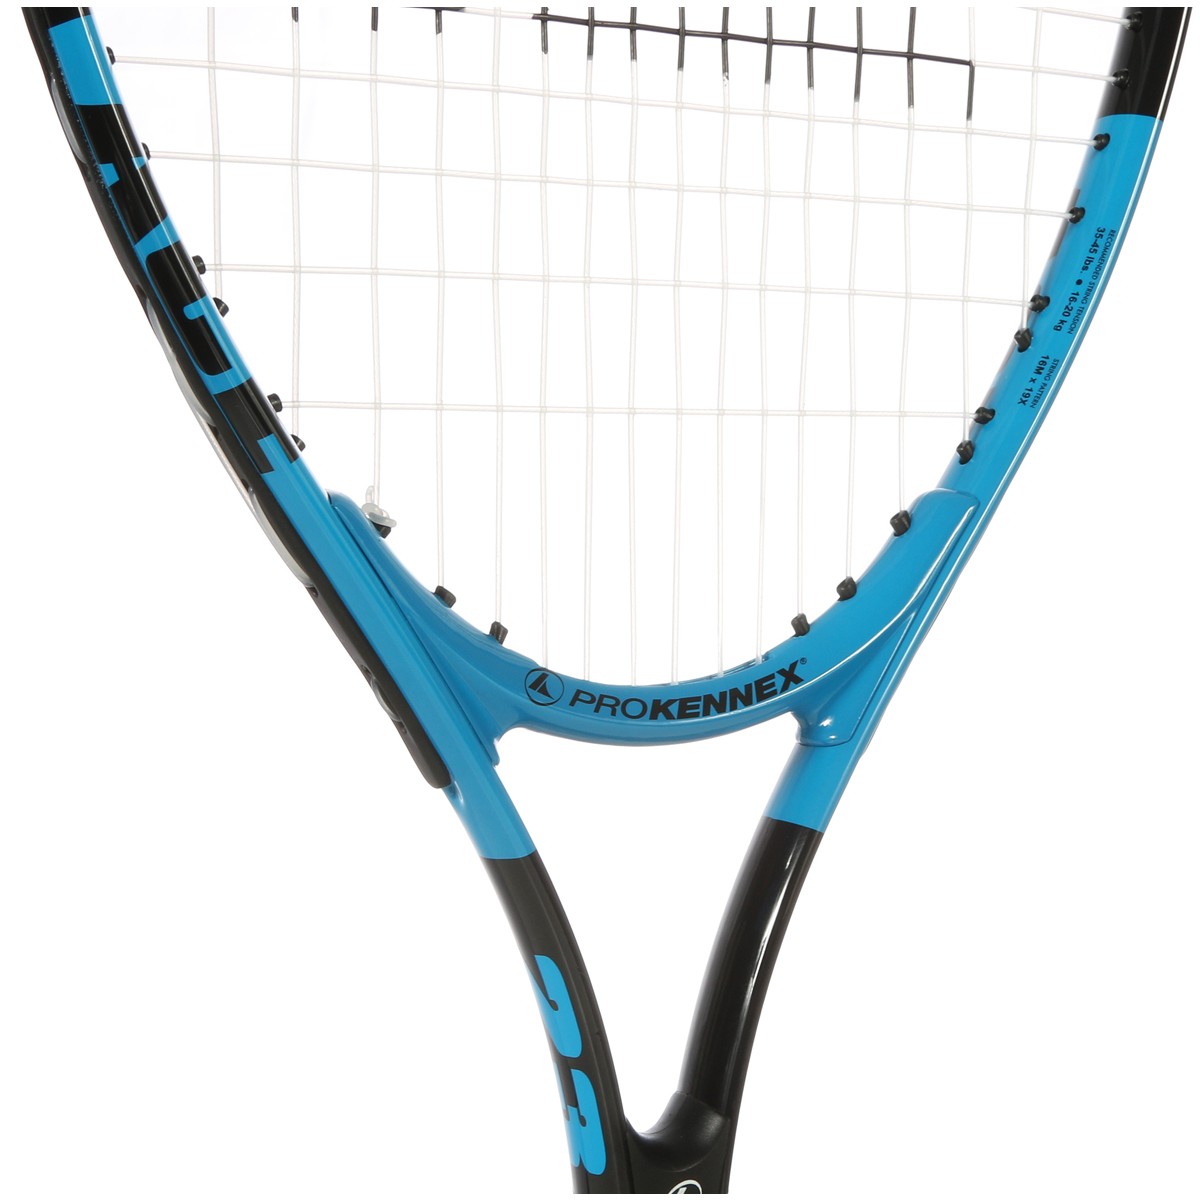 Pro Kennex Pro Ace JNR 23" Tennis Racket